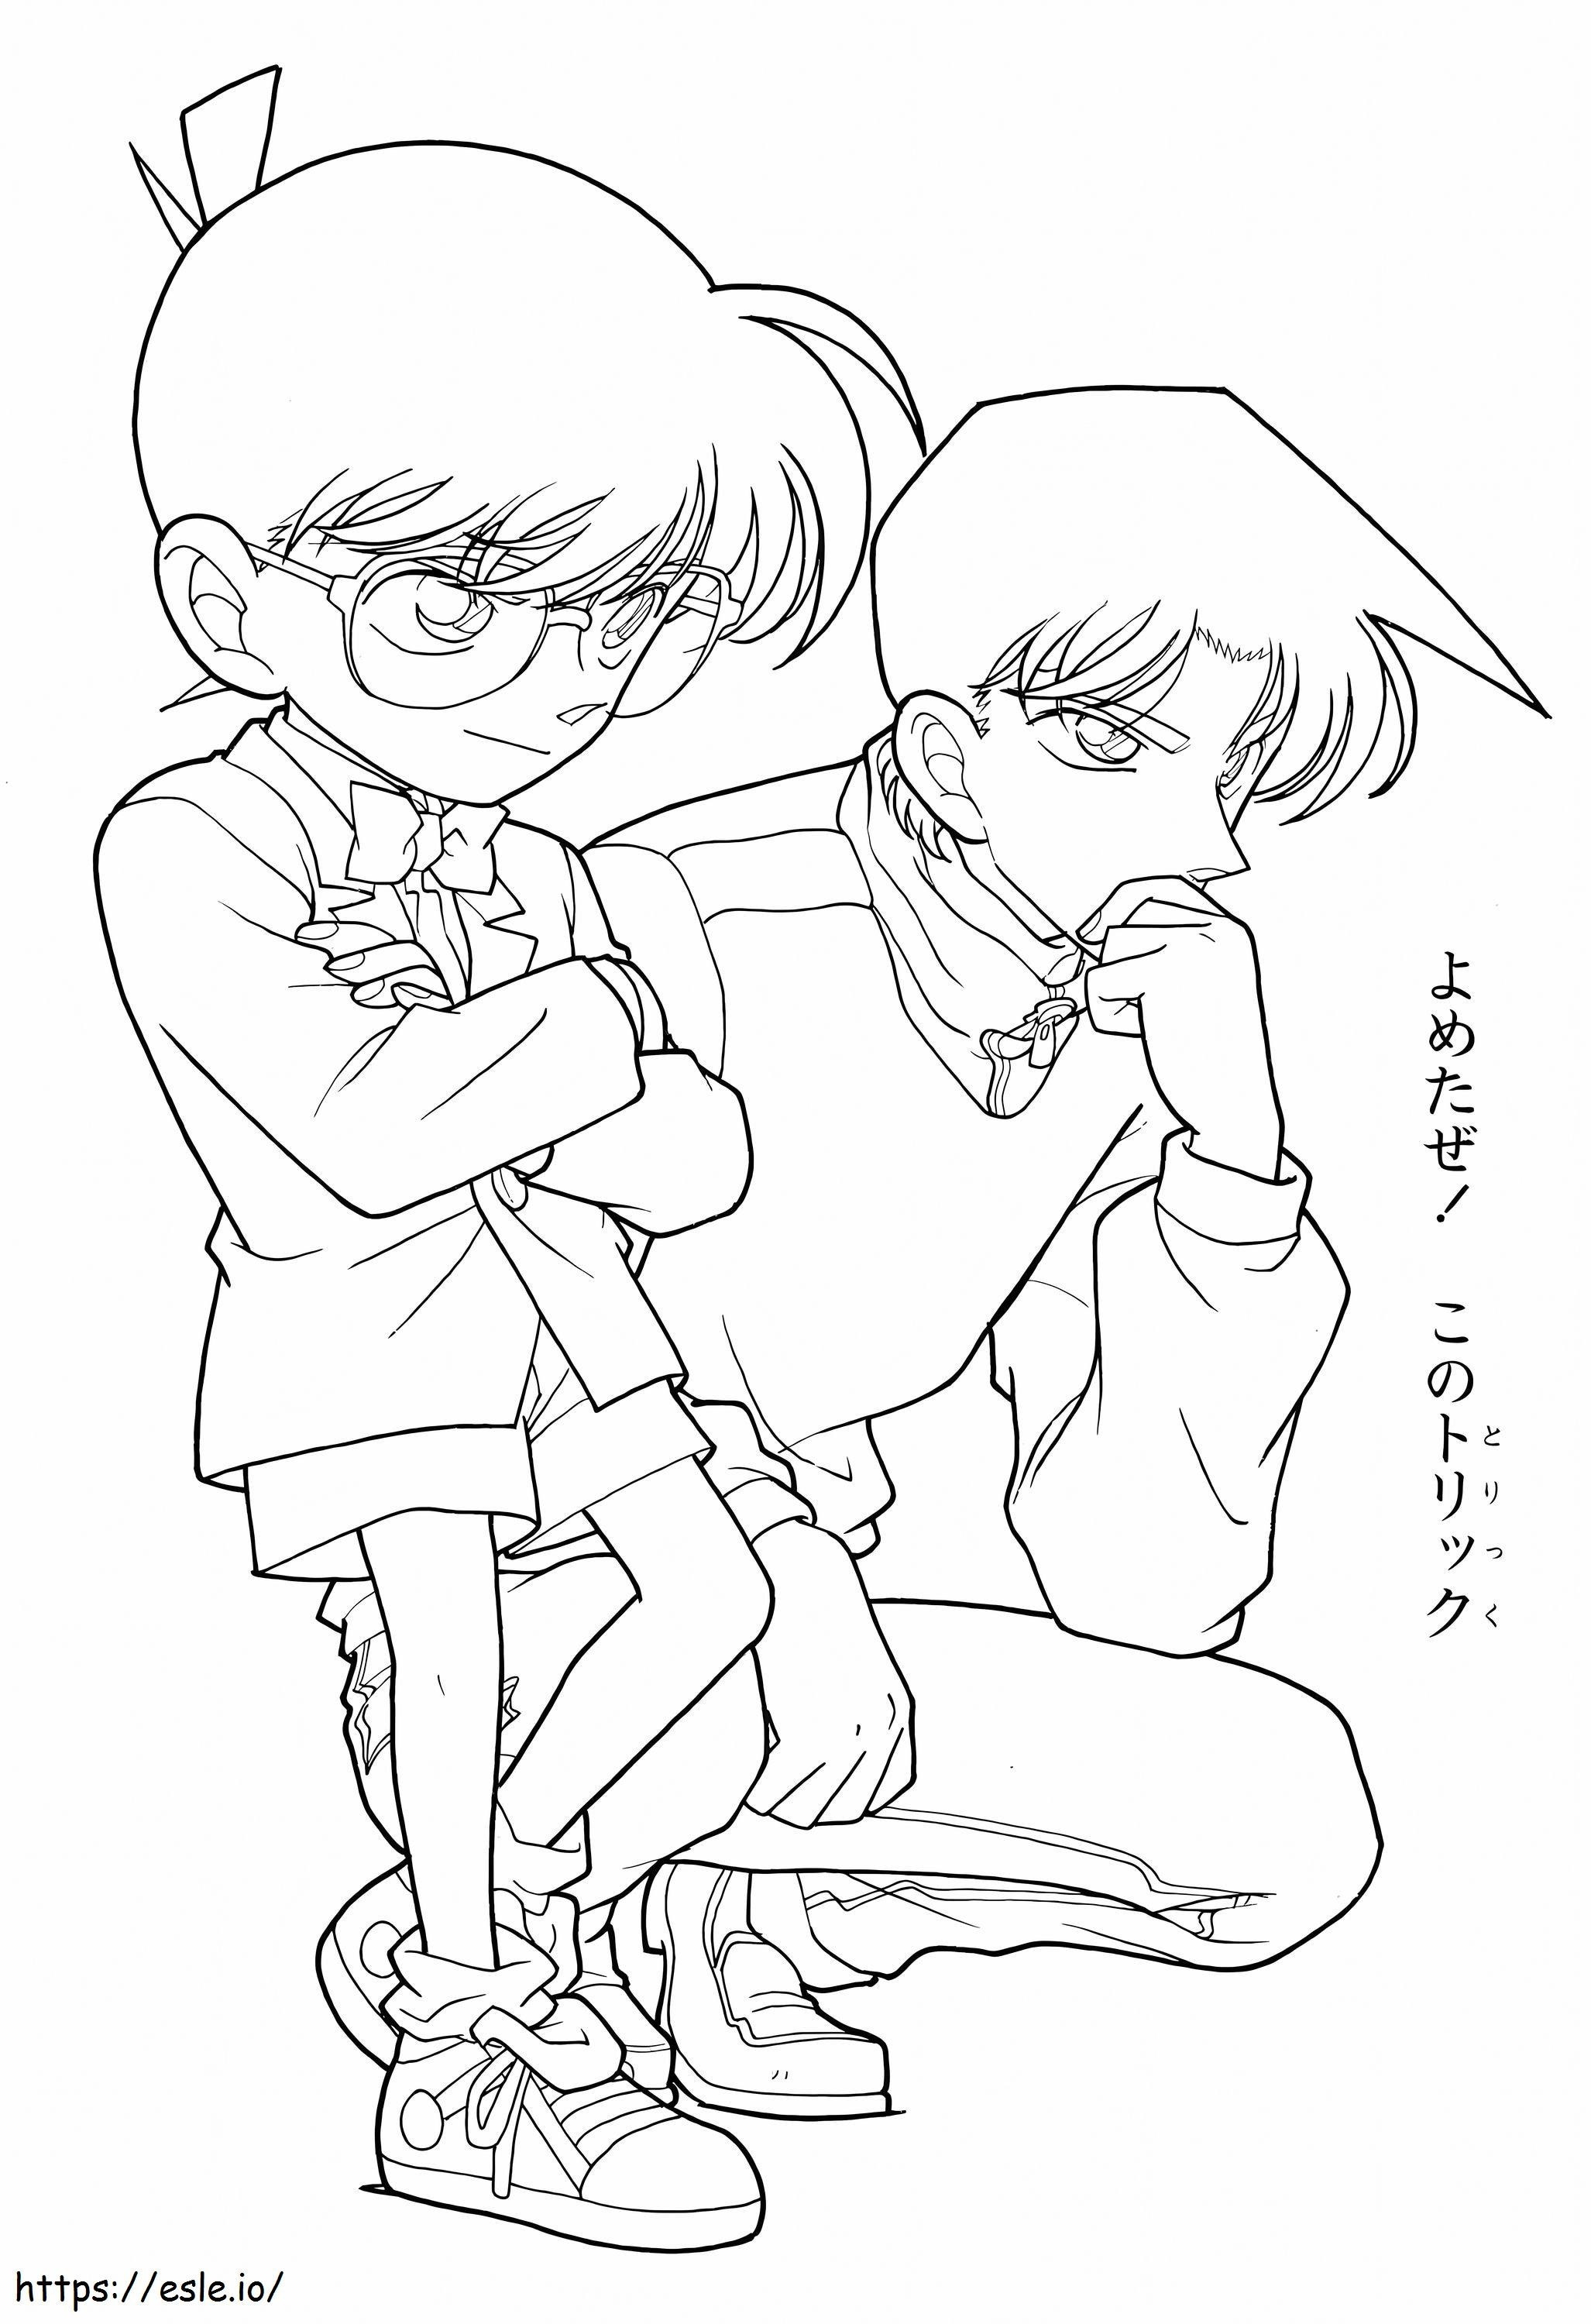 Conan ve Shinichi boyama